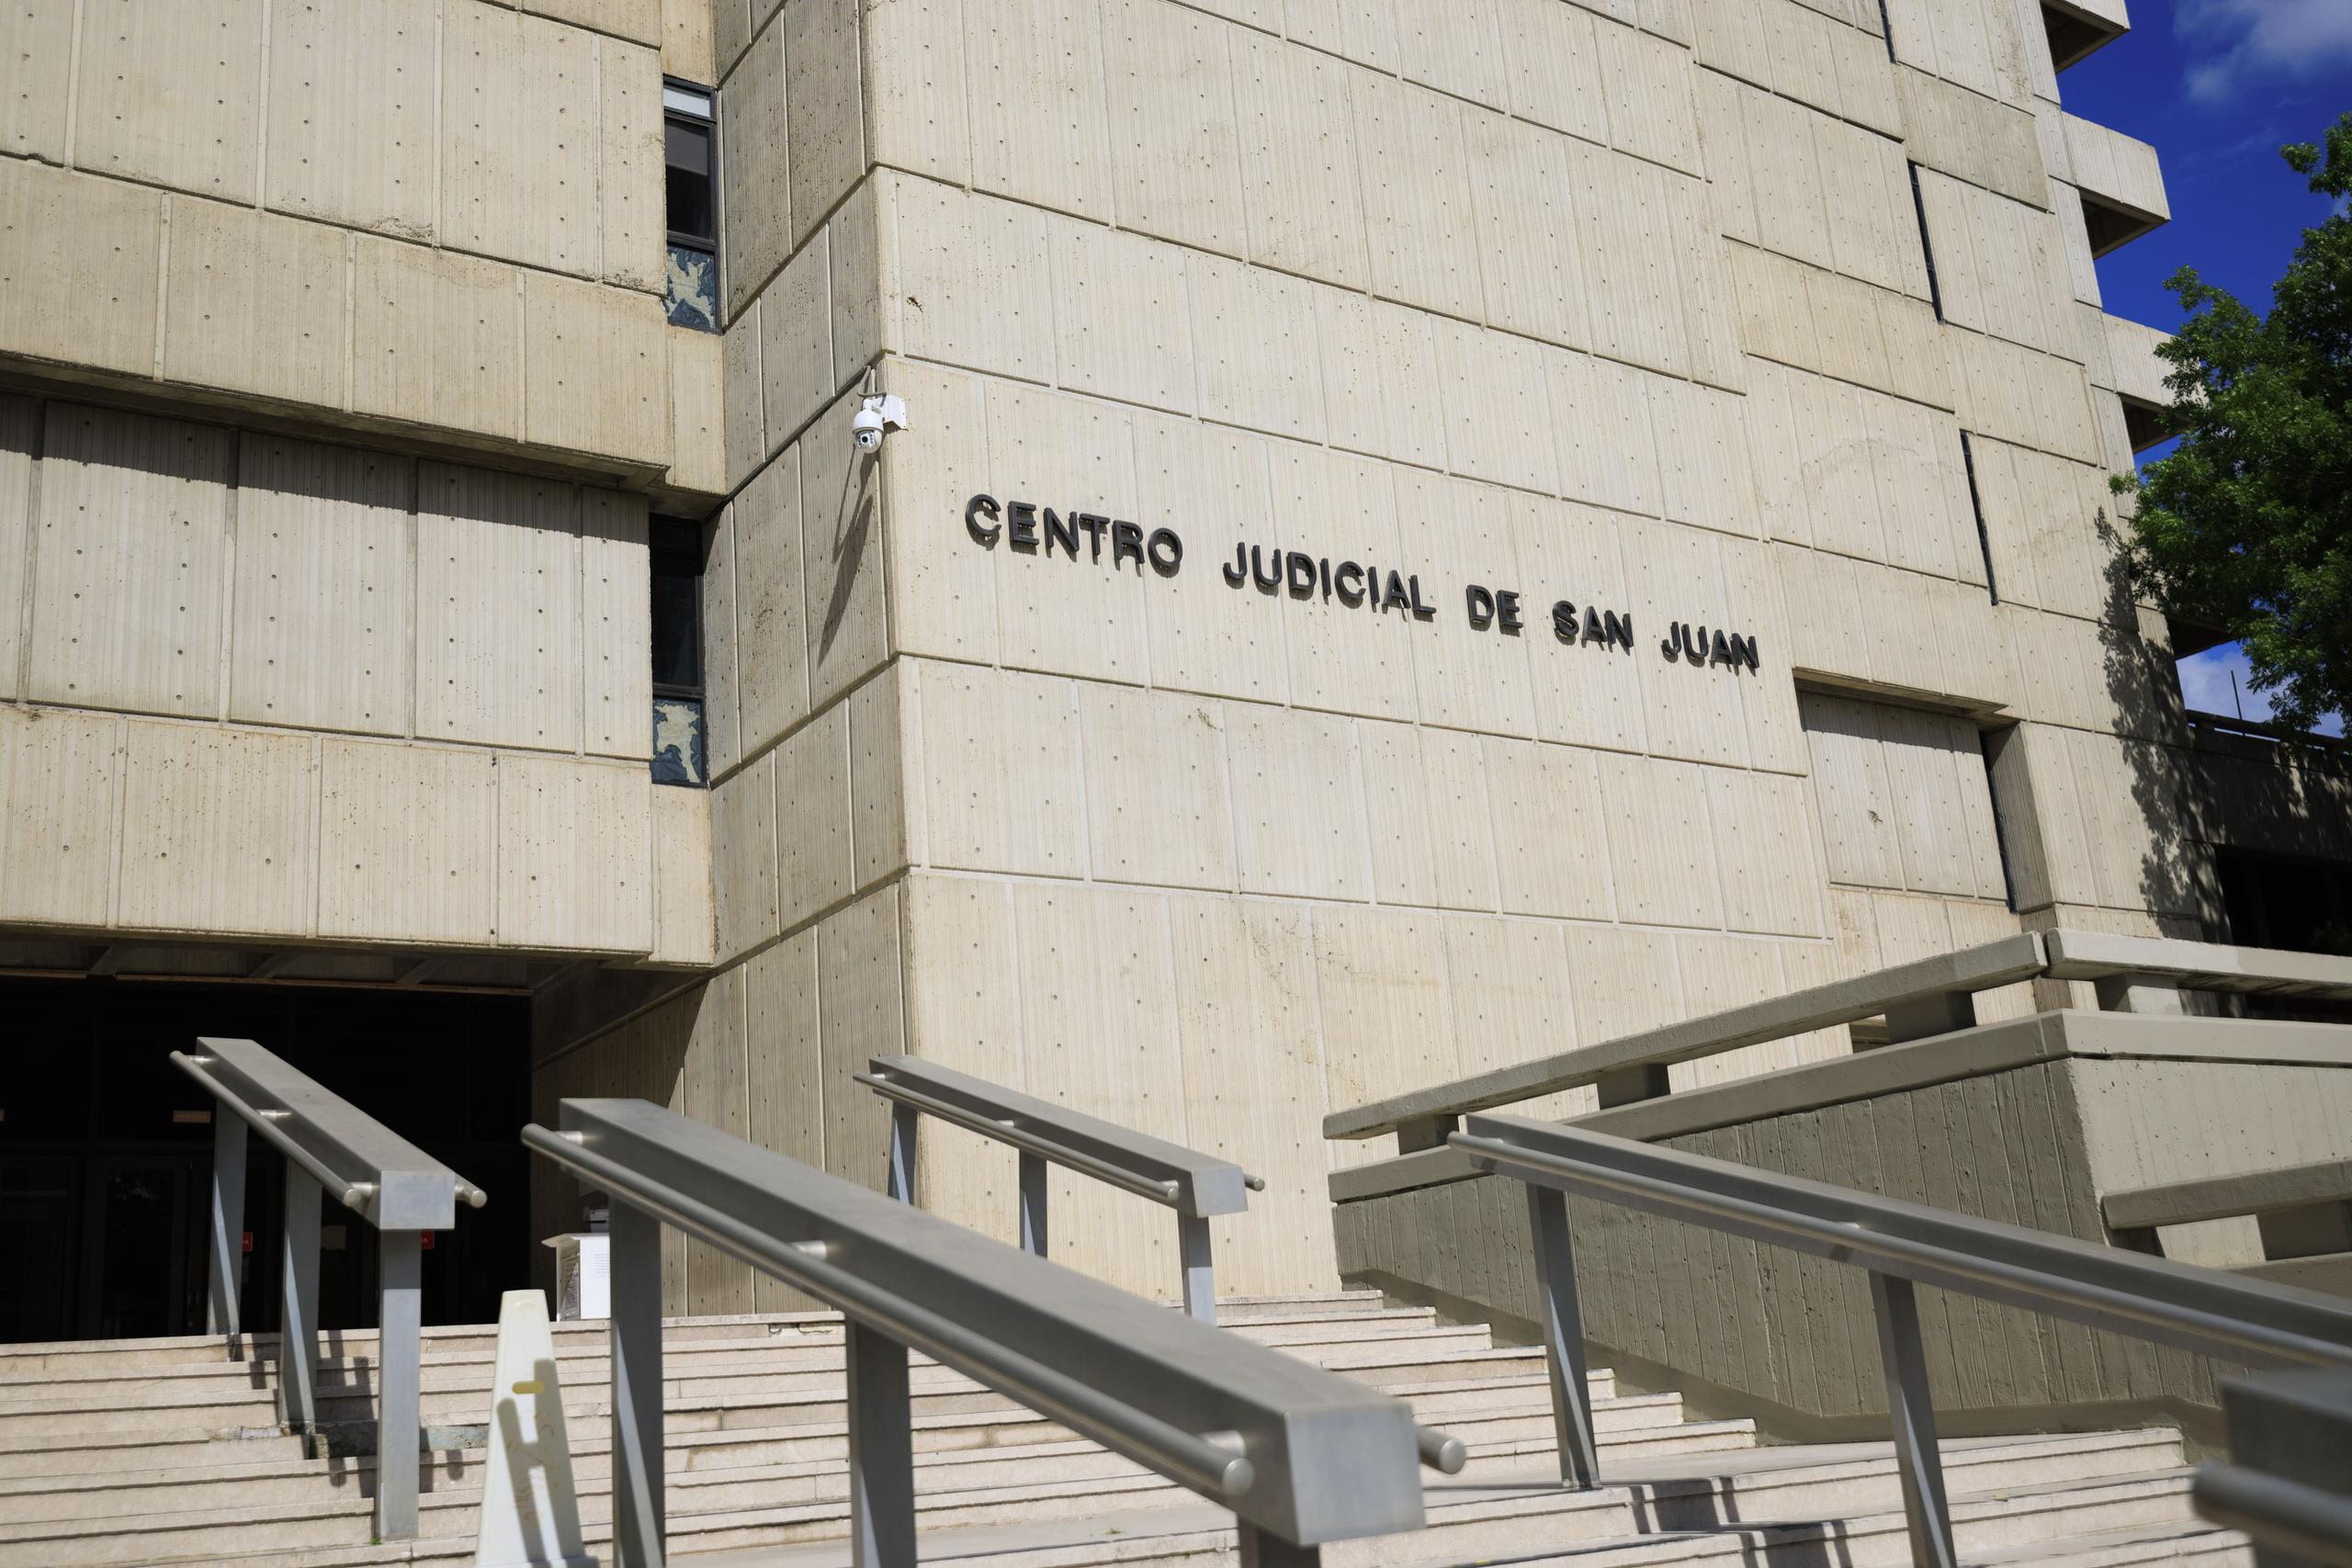 Centro Judicial de San Juan. (Archivo / FOTO POR: Ramon " Tonito " Zayas / GFR Media)